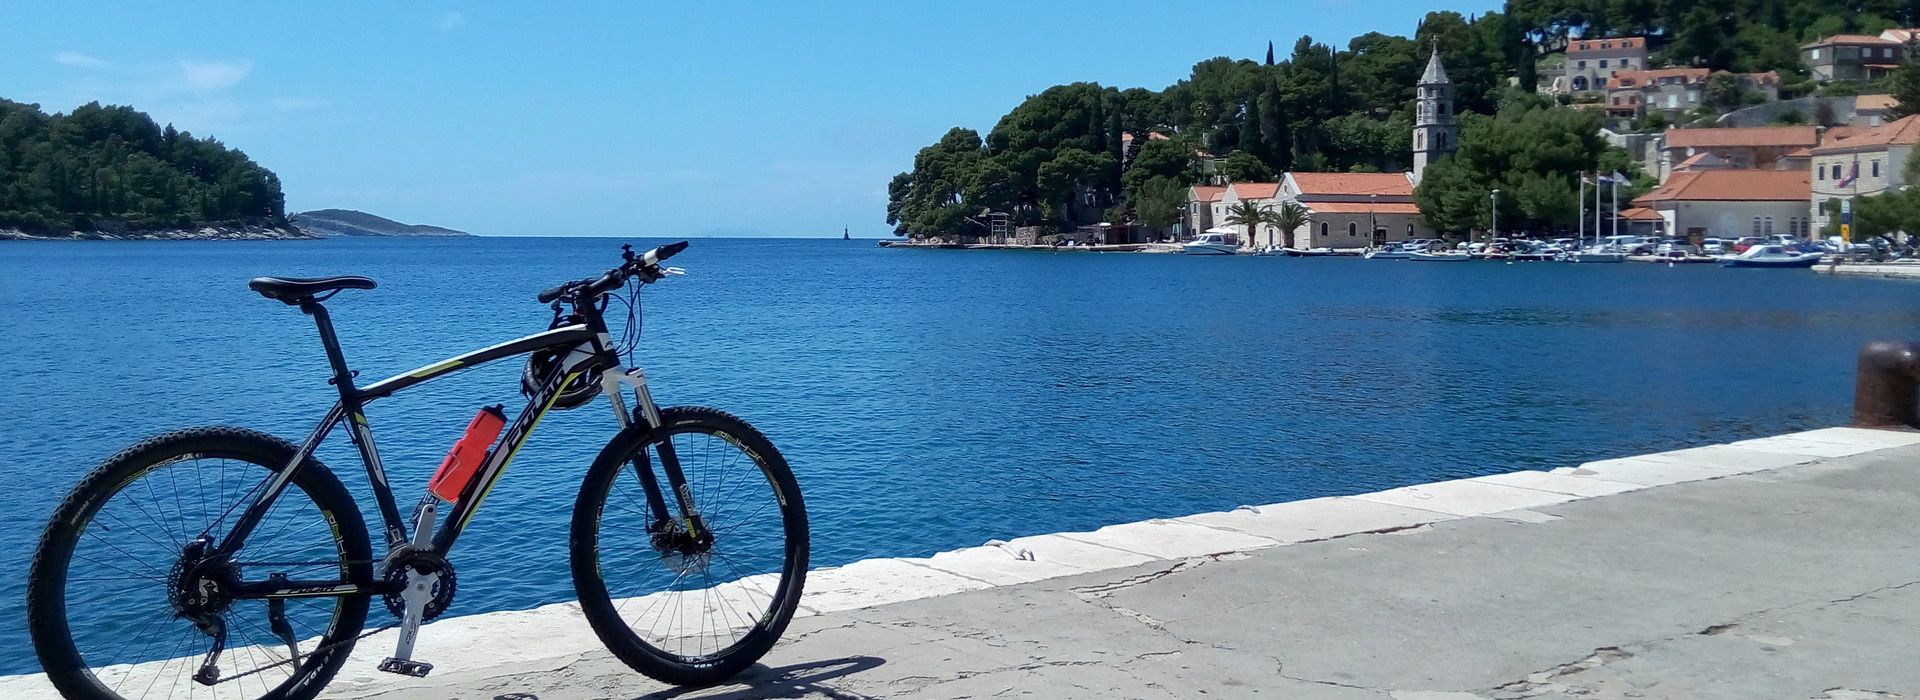 Cycling on the Dalmatian Coast guided holiday - Cavtat